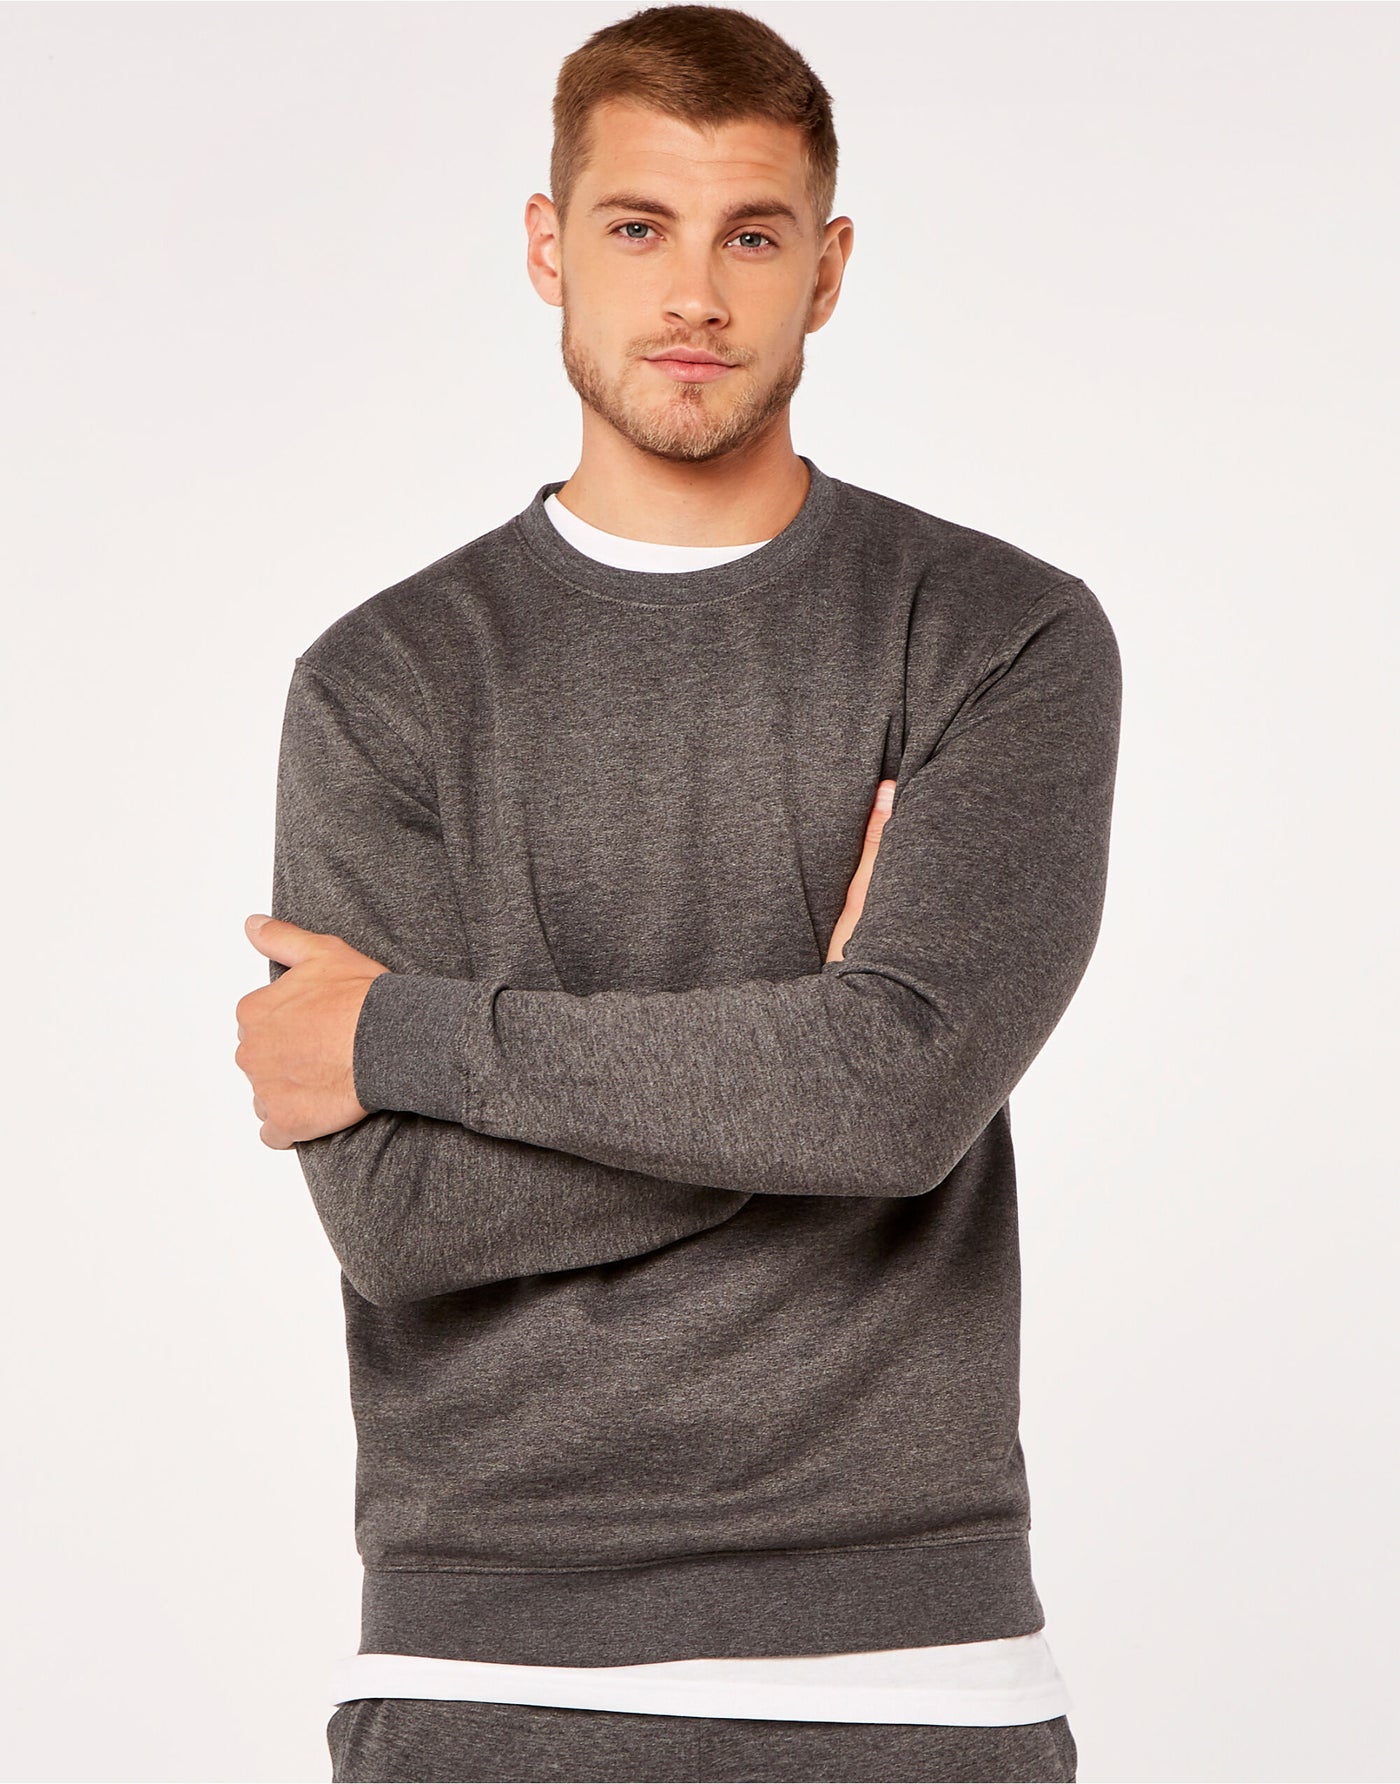 Adult Premium Sweatshirt Model Image